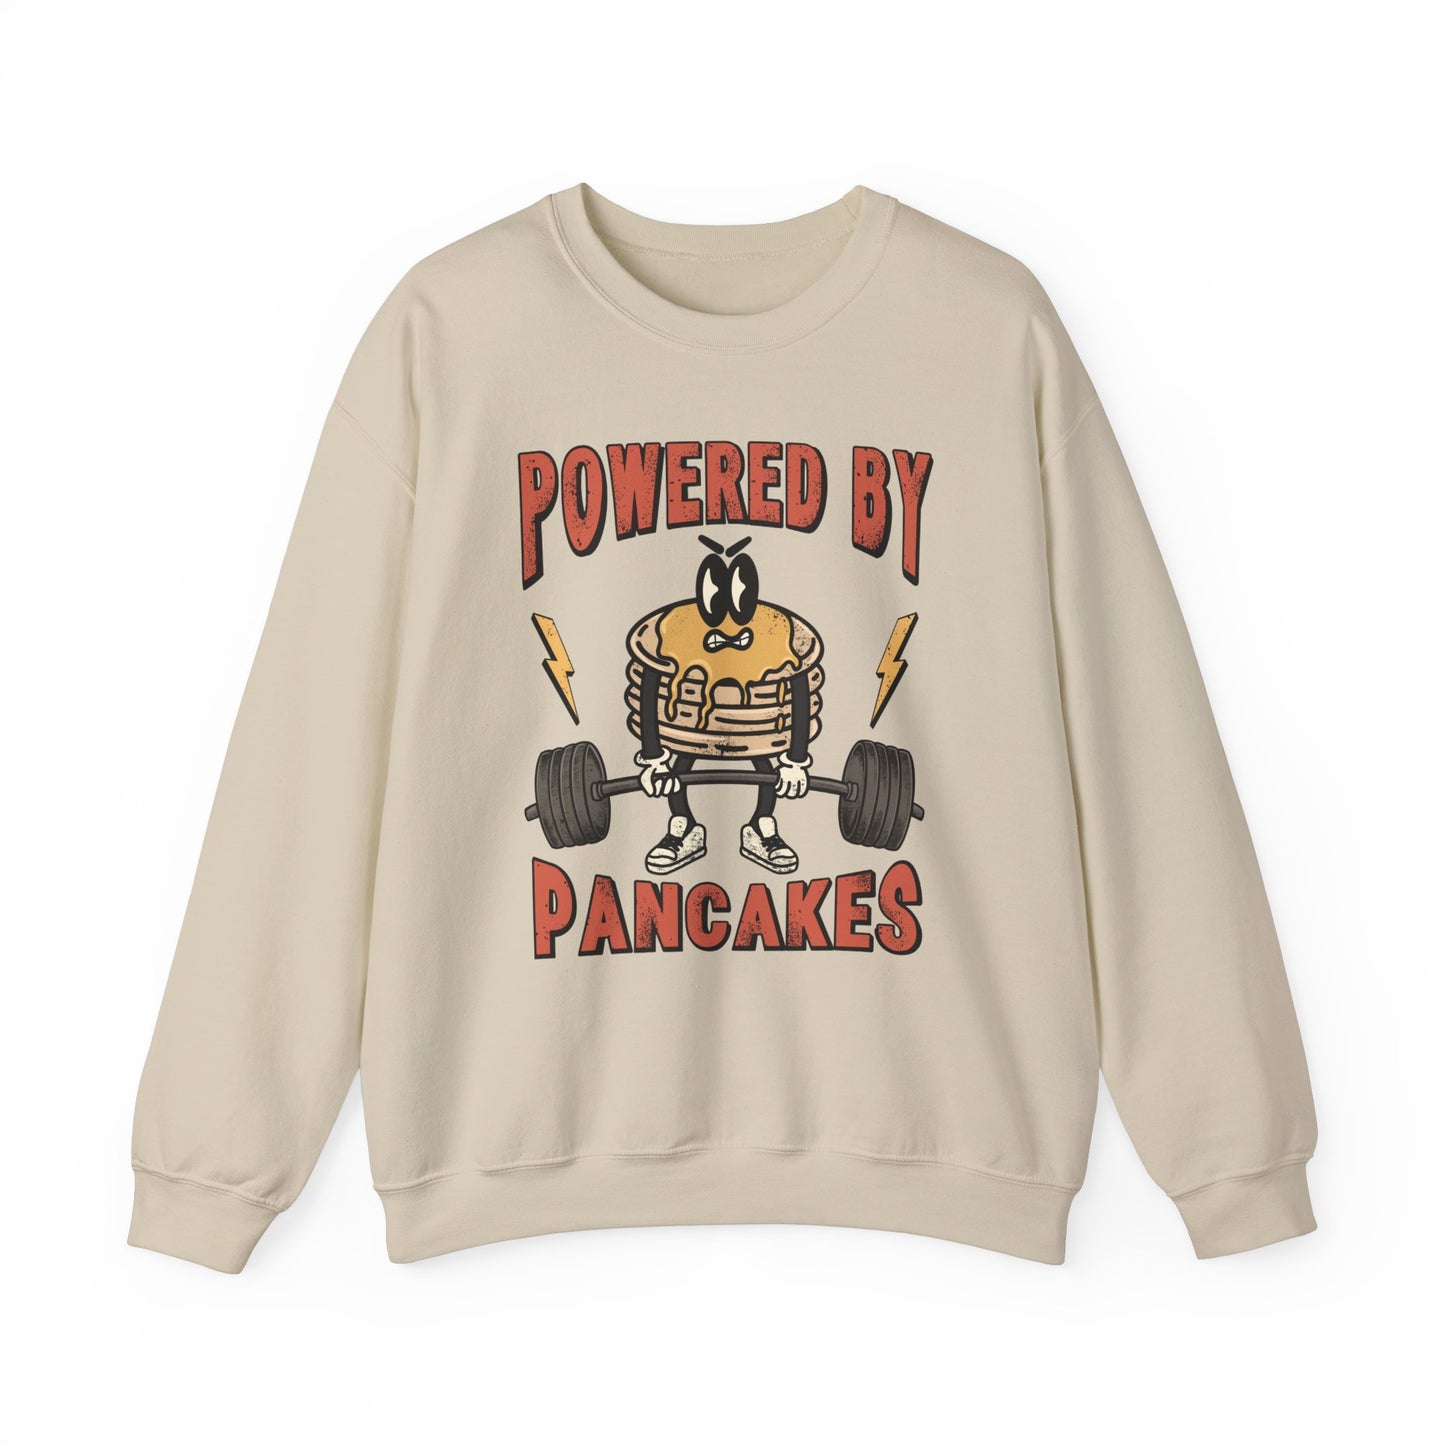 Powered by Pancakes Crewneck Sweatshirt